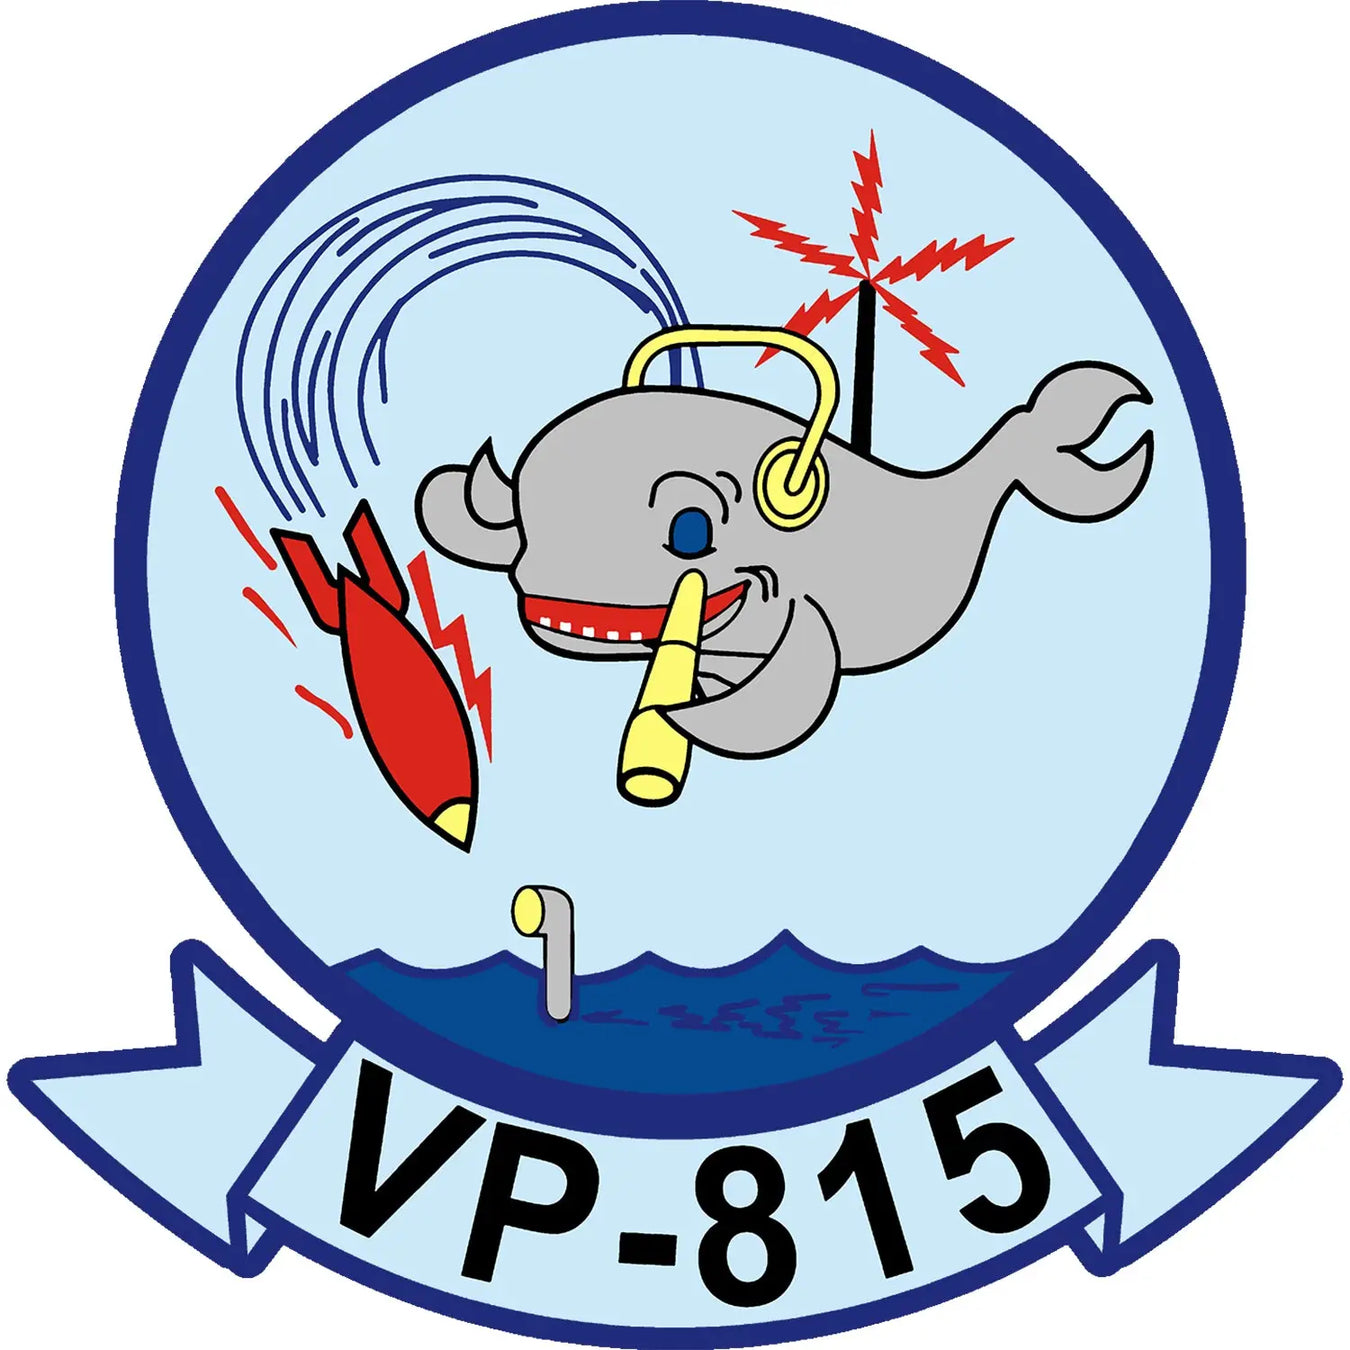 Patrol Squadron 815 (VP-815)